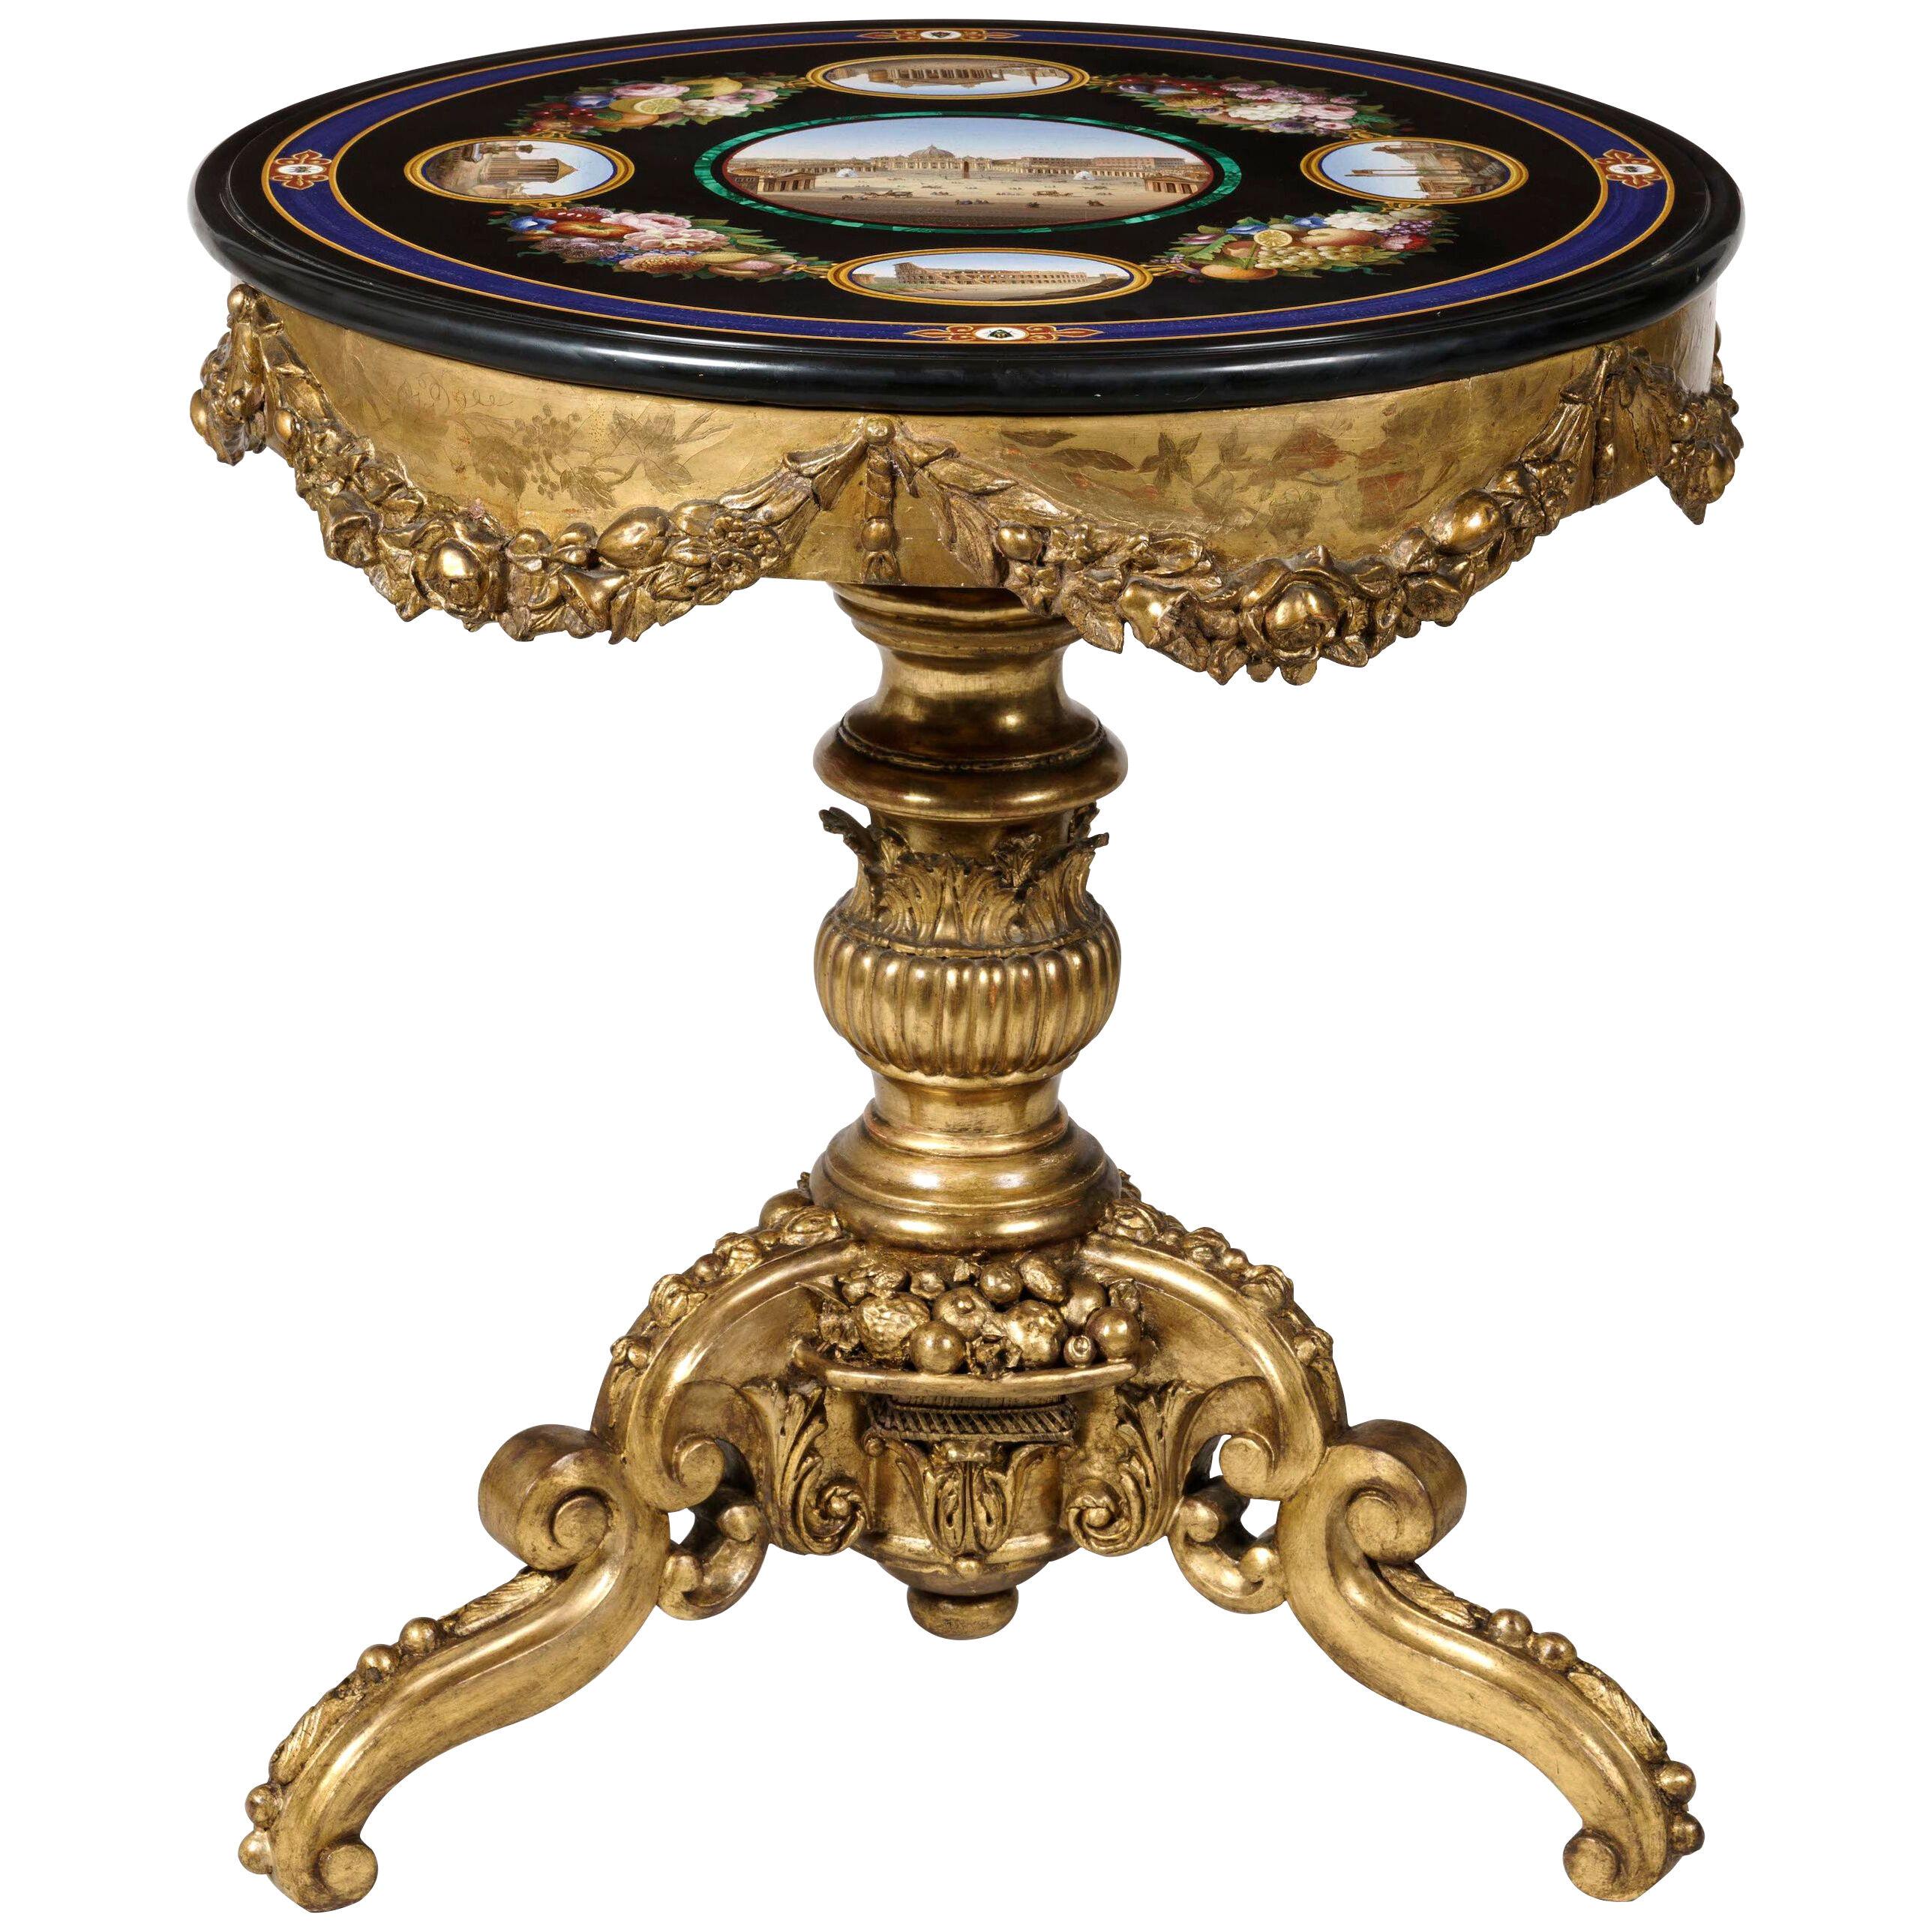 19th Century Italian Micro-Mosaic Grand Tour Table Attributed to Roccheggiani